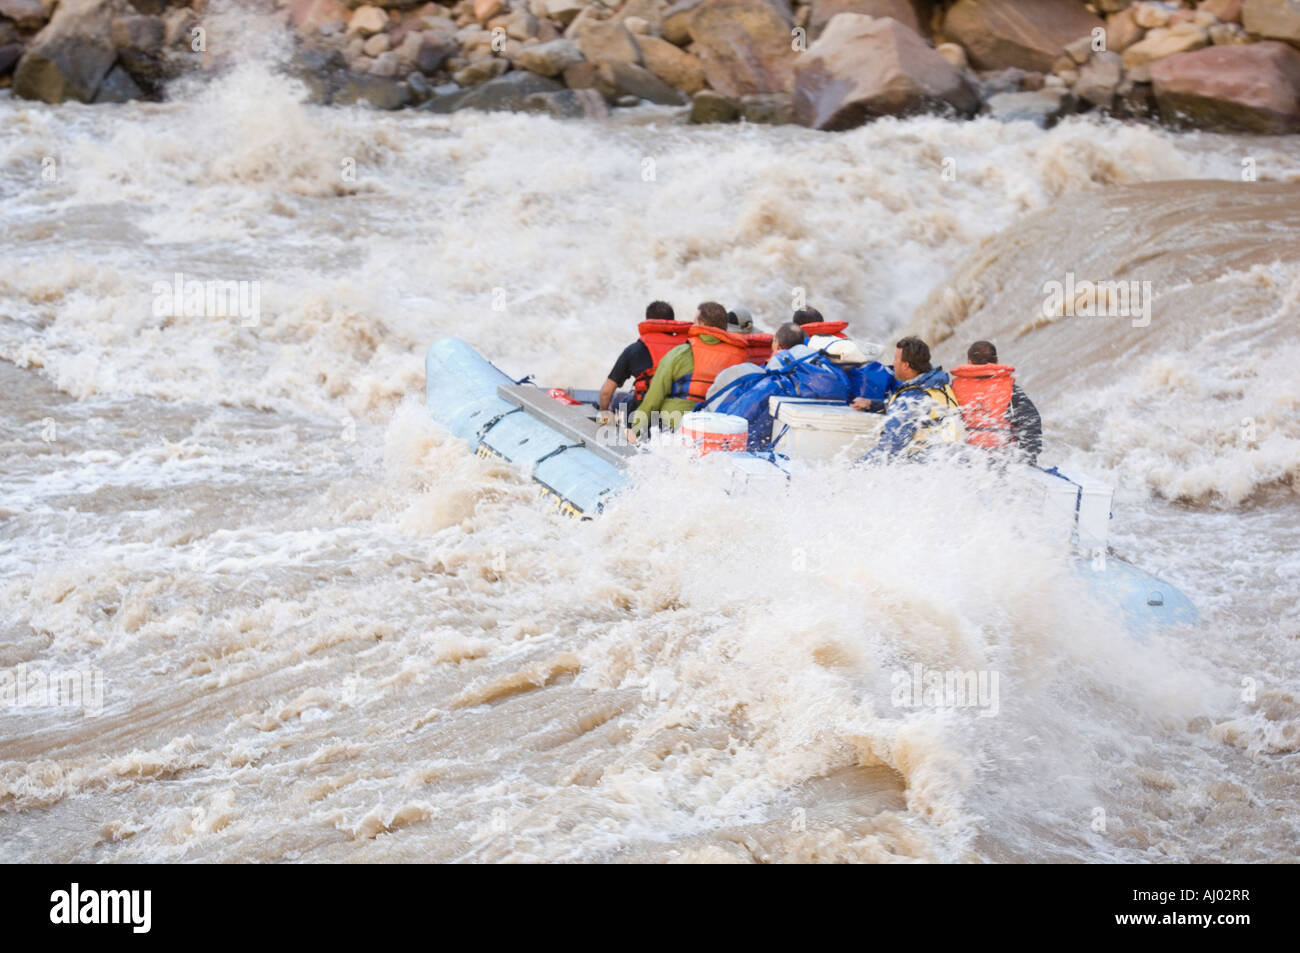 People white water rafting, Colorado River, Moab, Utah, United States Stock Photo